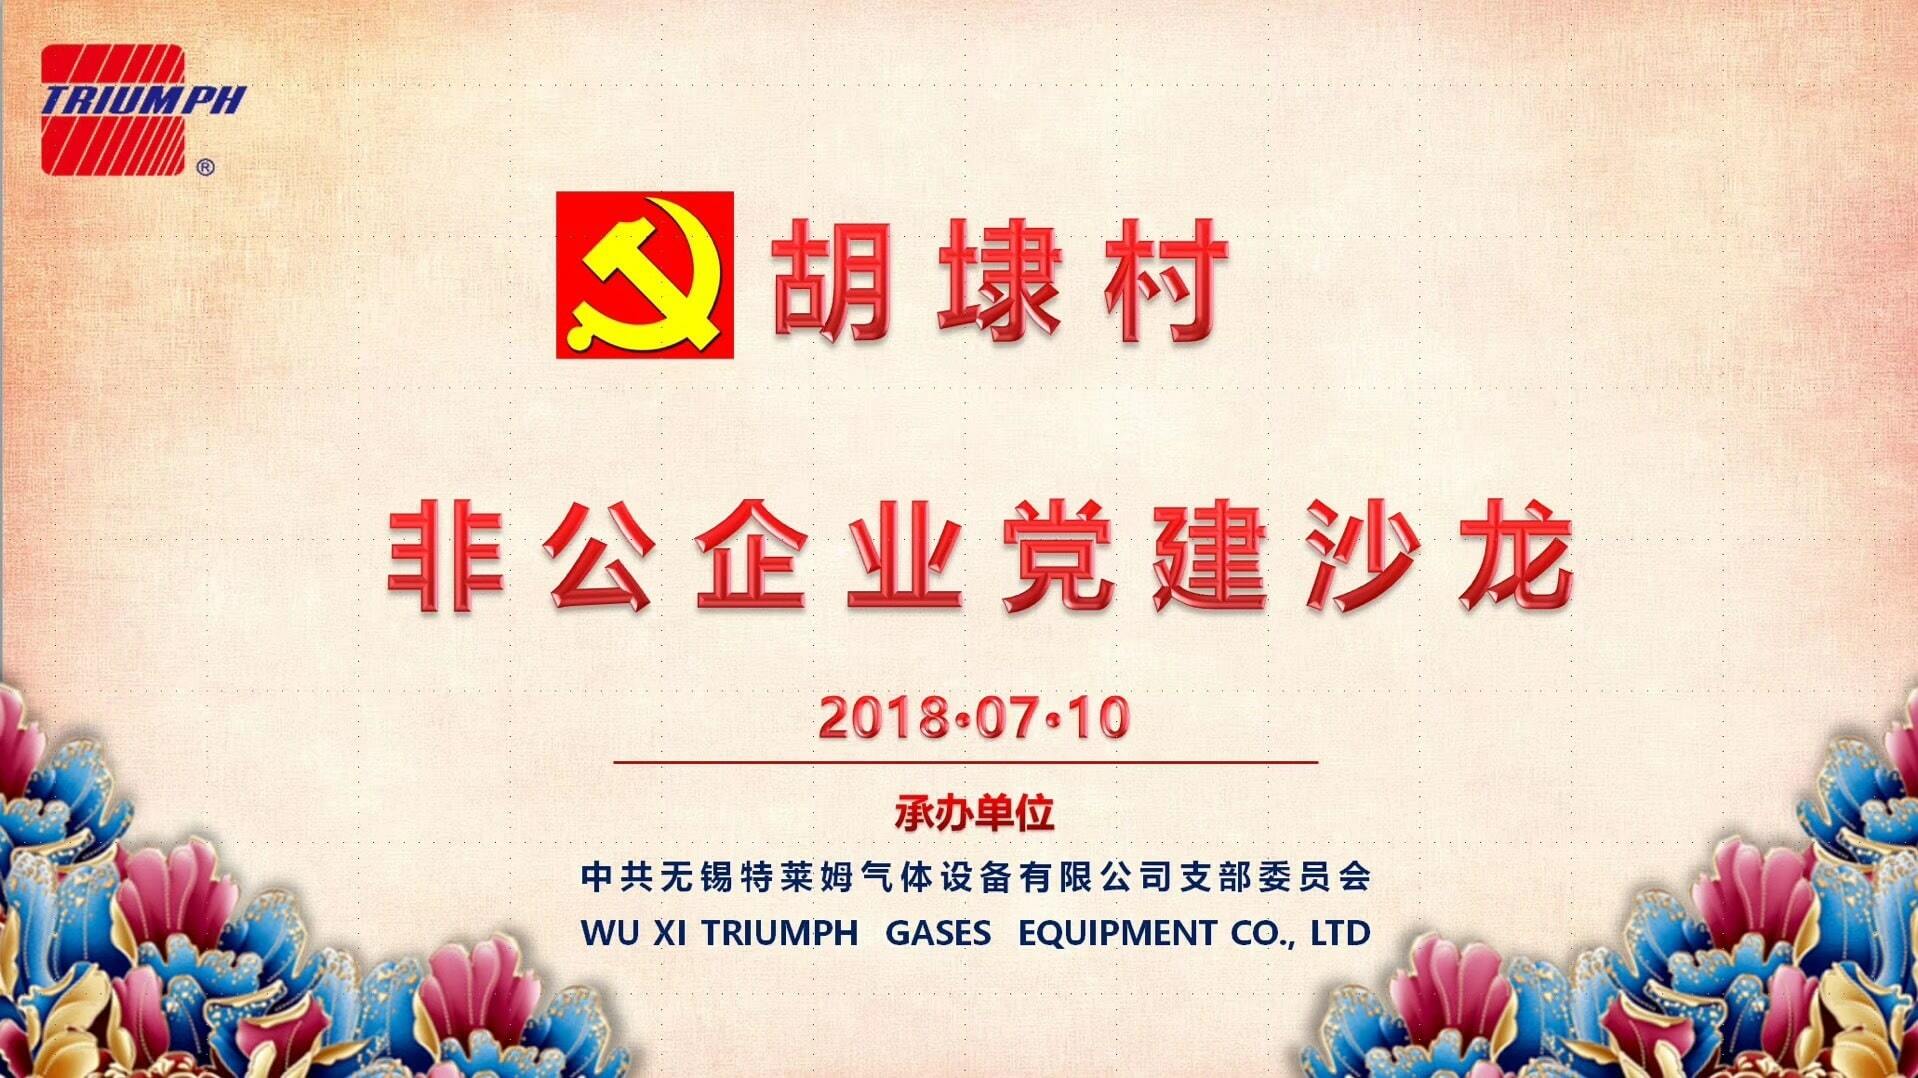 Hu dai village “Non-public enterprise party construction salon” was Successfully held in wuxi Triumph